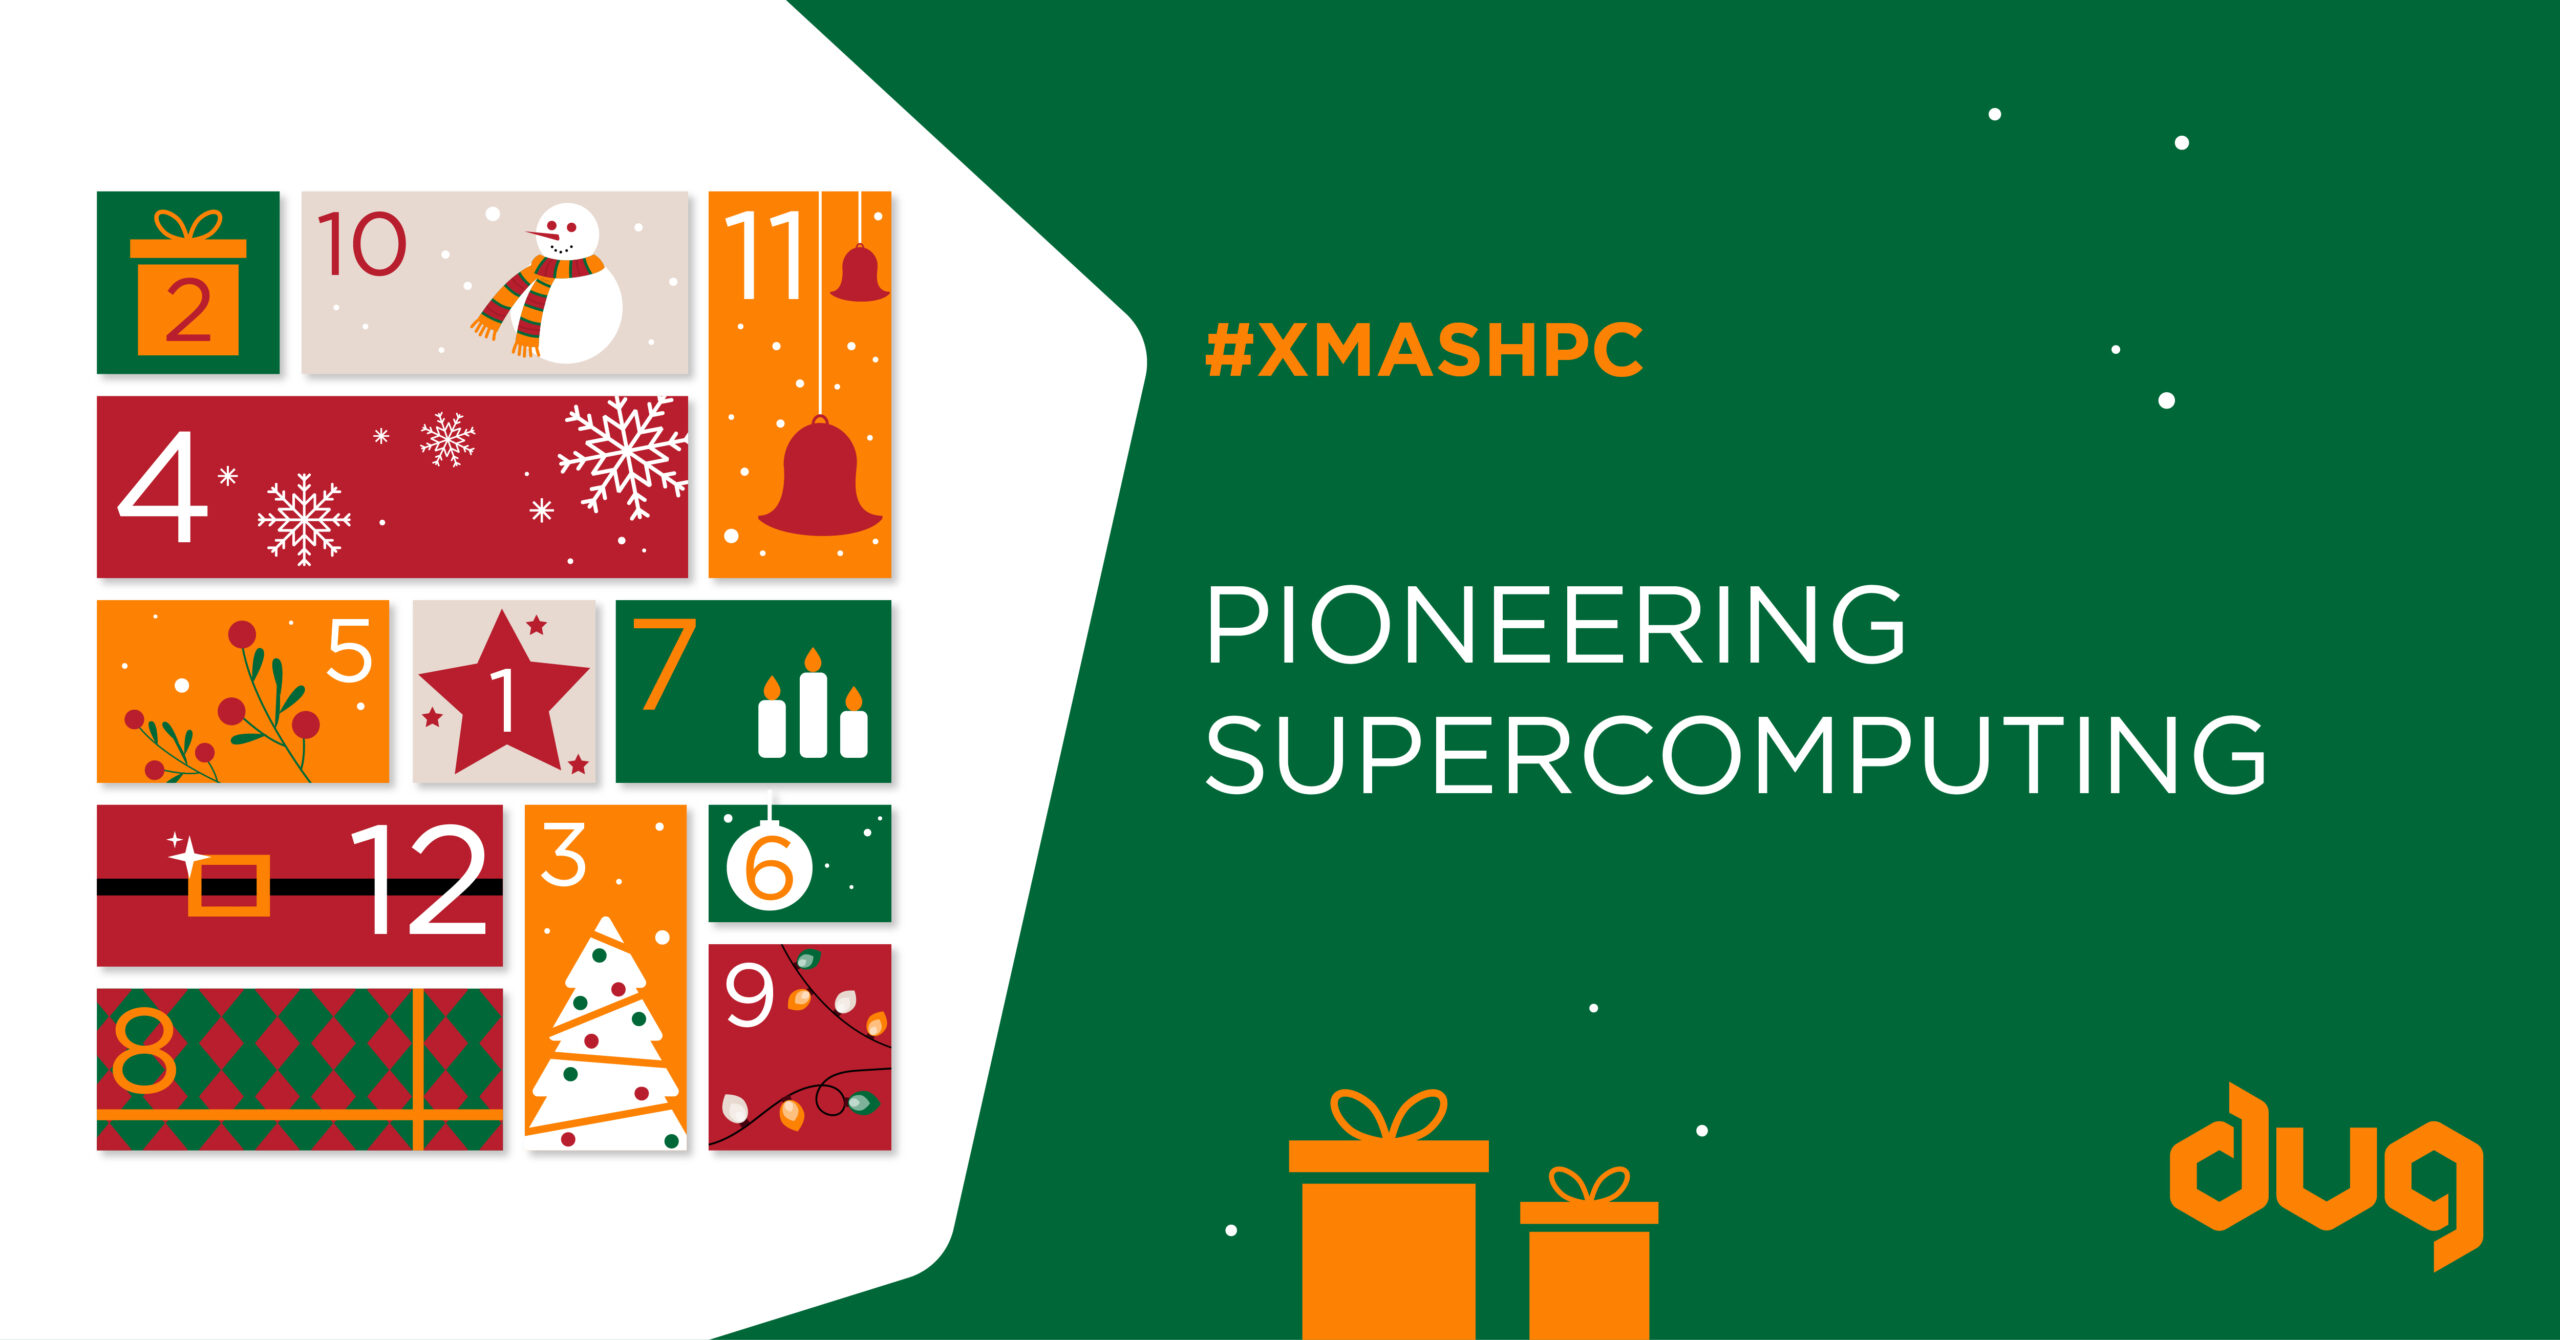 Pioneering supercomputing